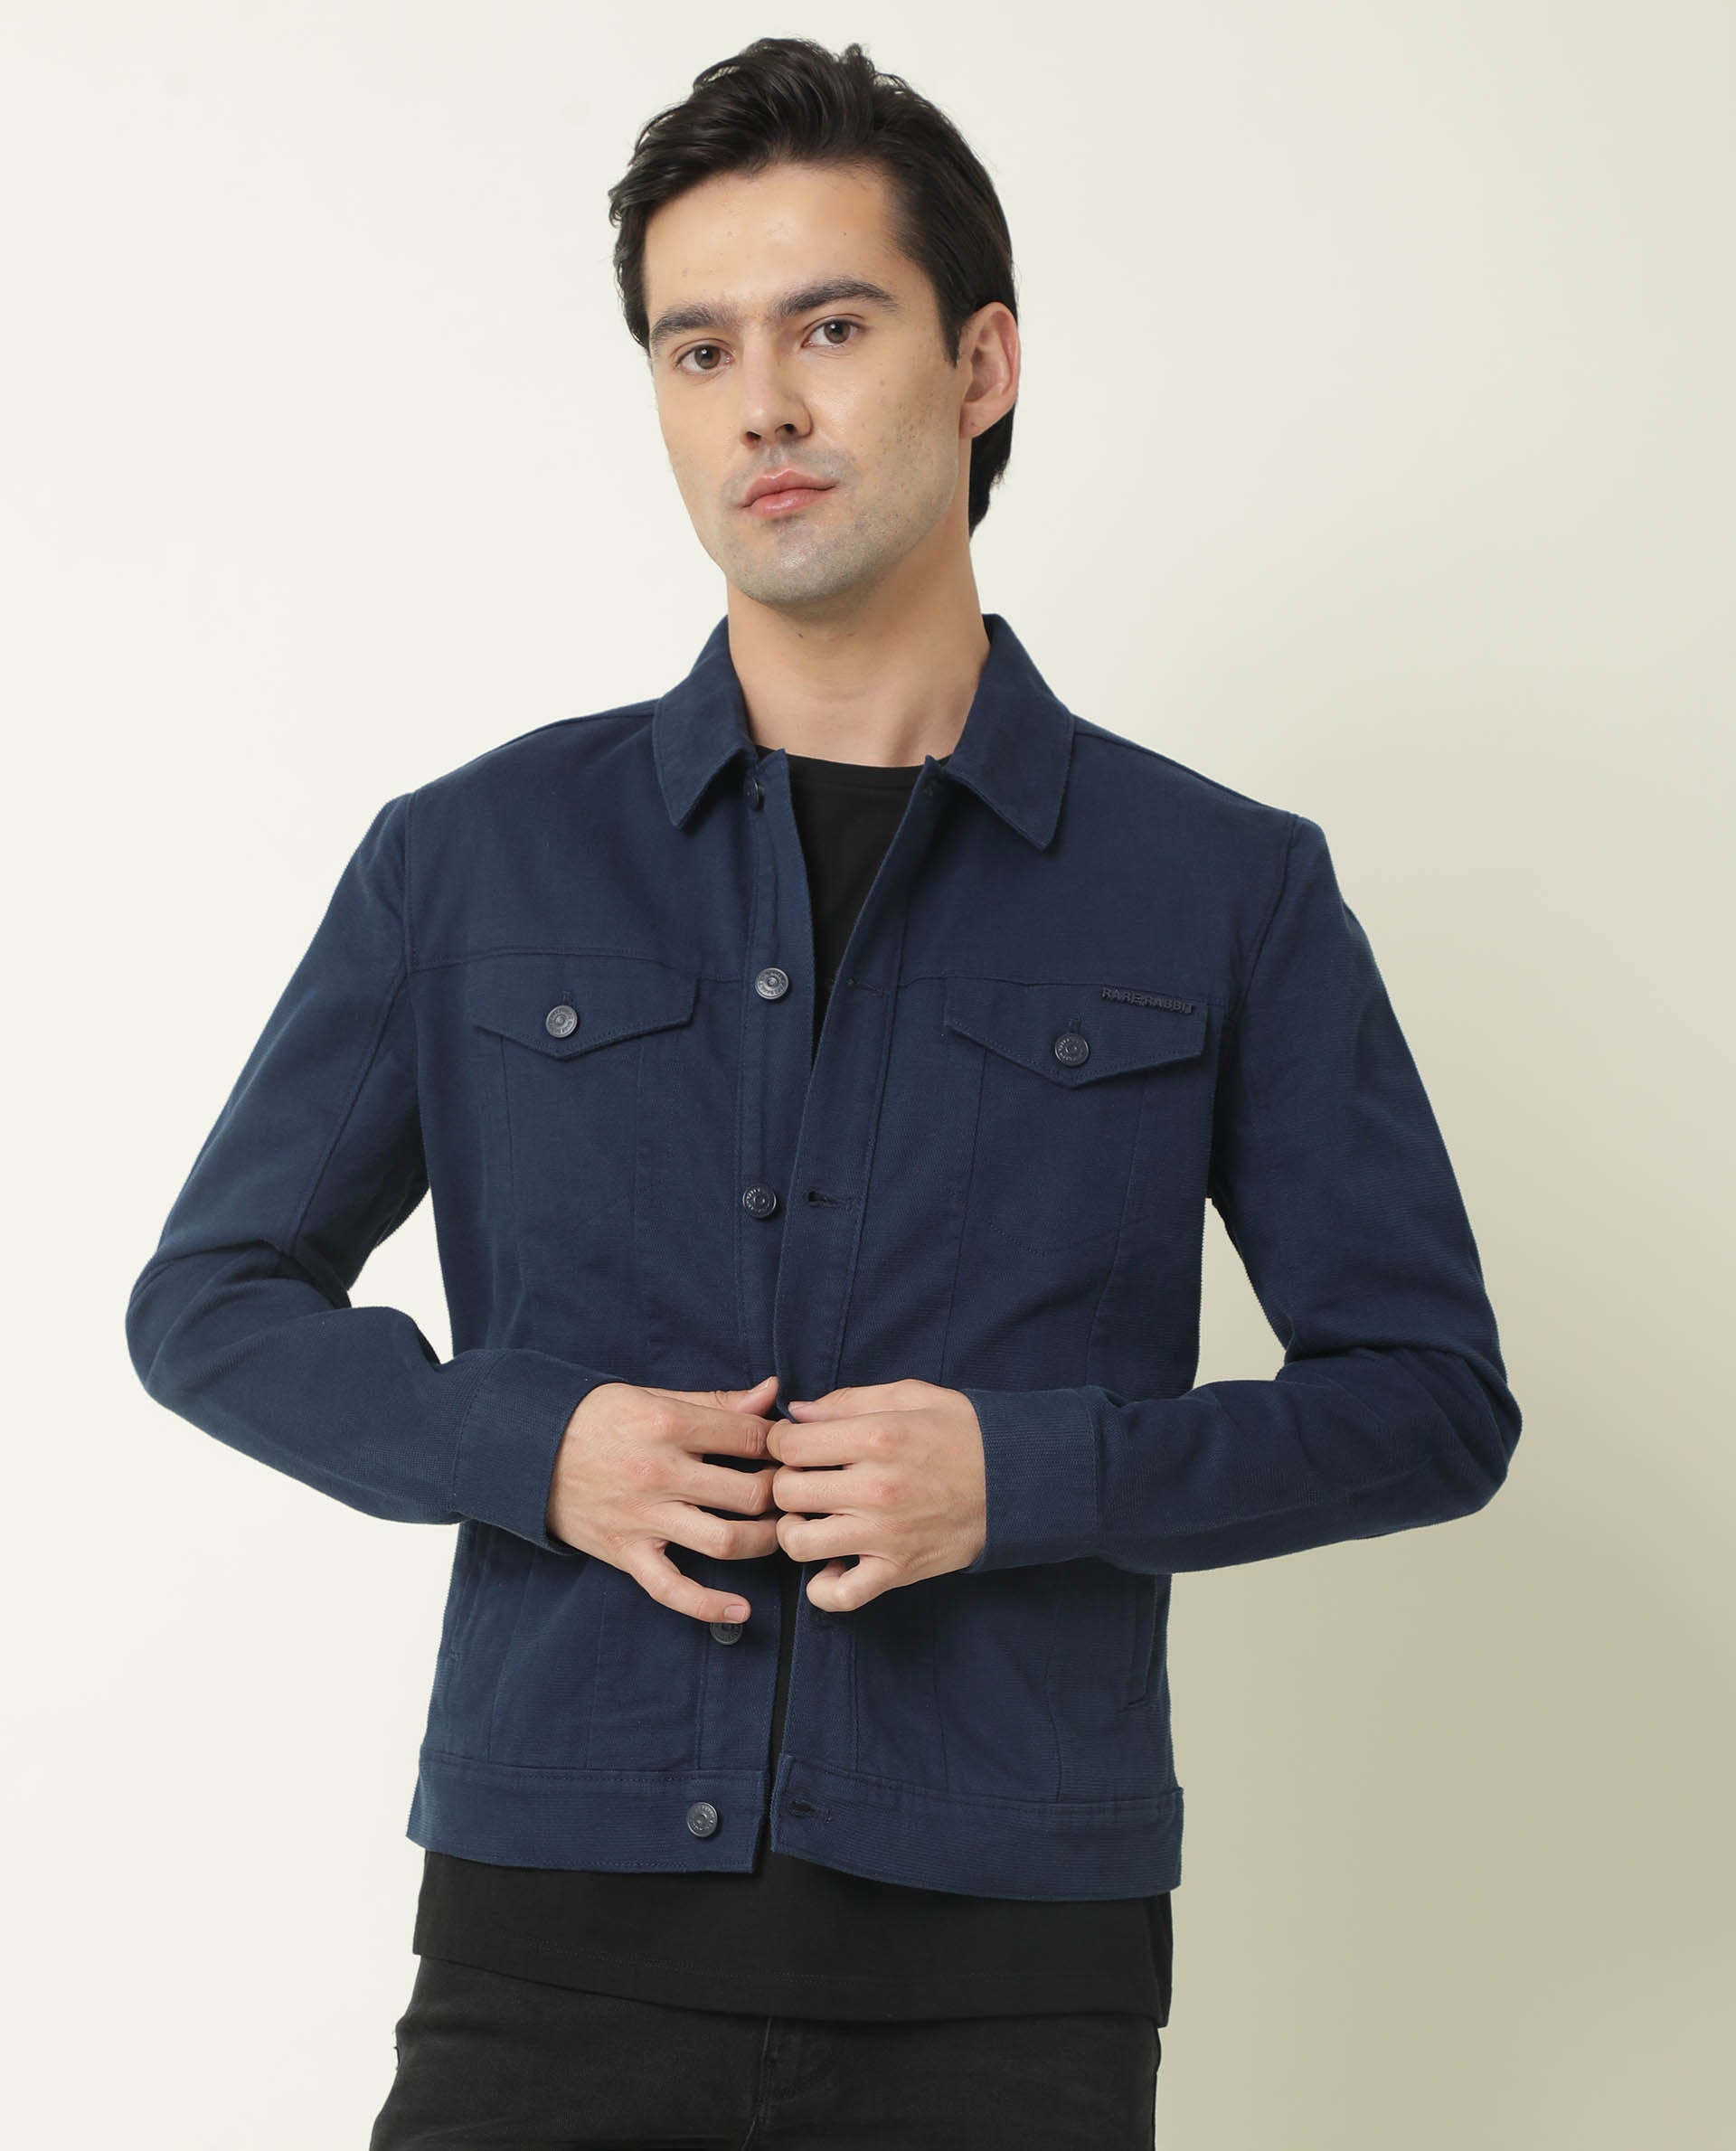 BOGIE Men Jacket Suit Blazer 2-Button Front Casual Business Size 48 Grey  Genuine | eBay